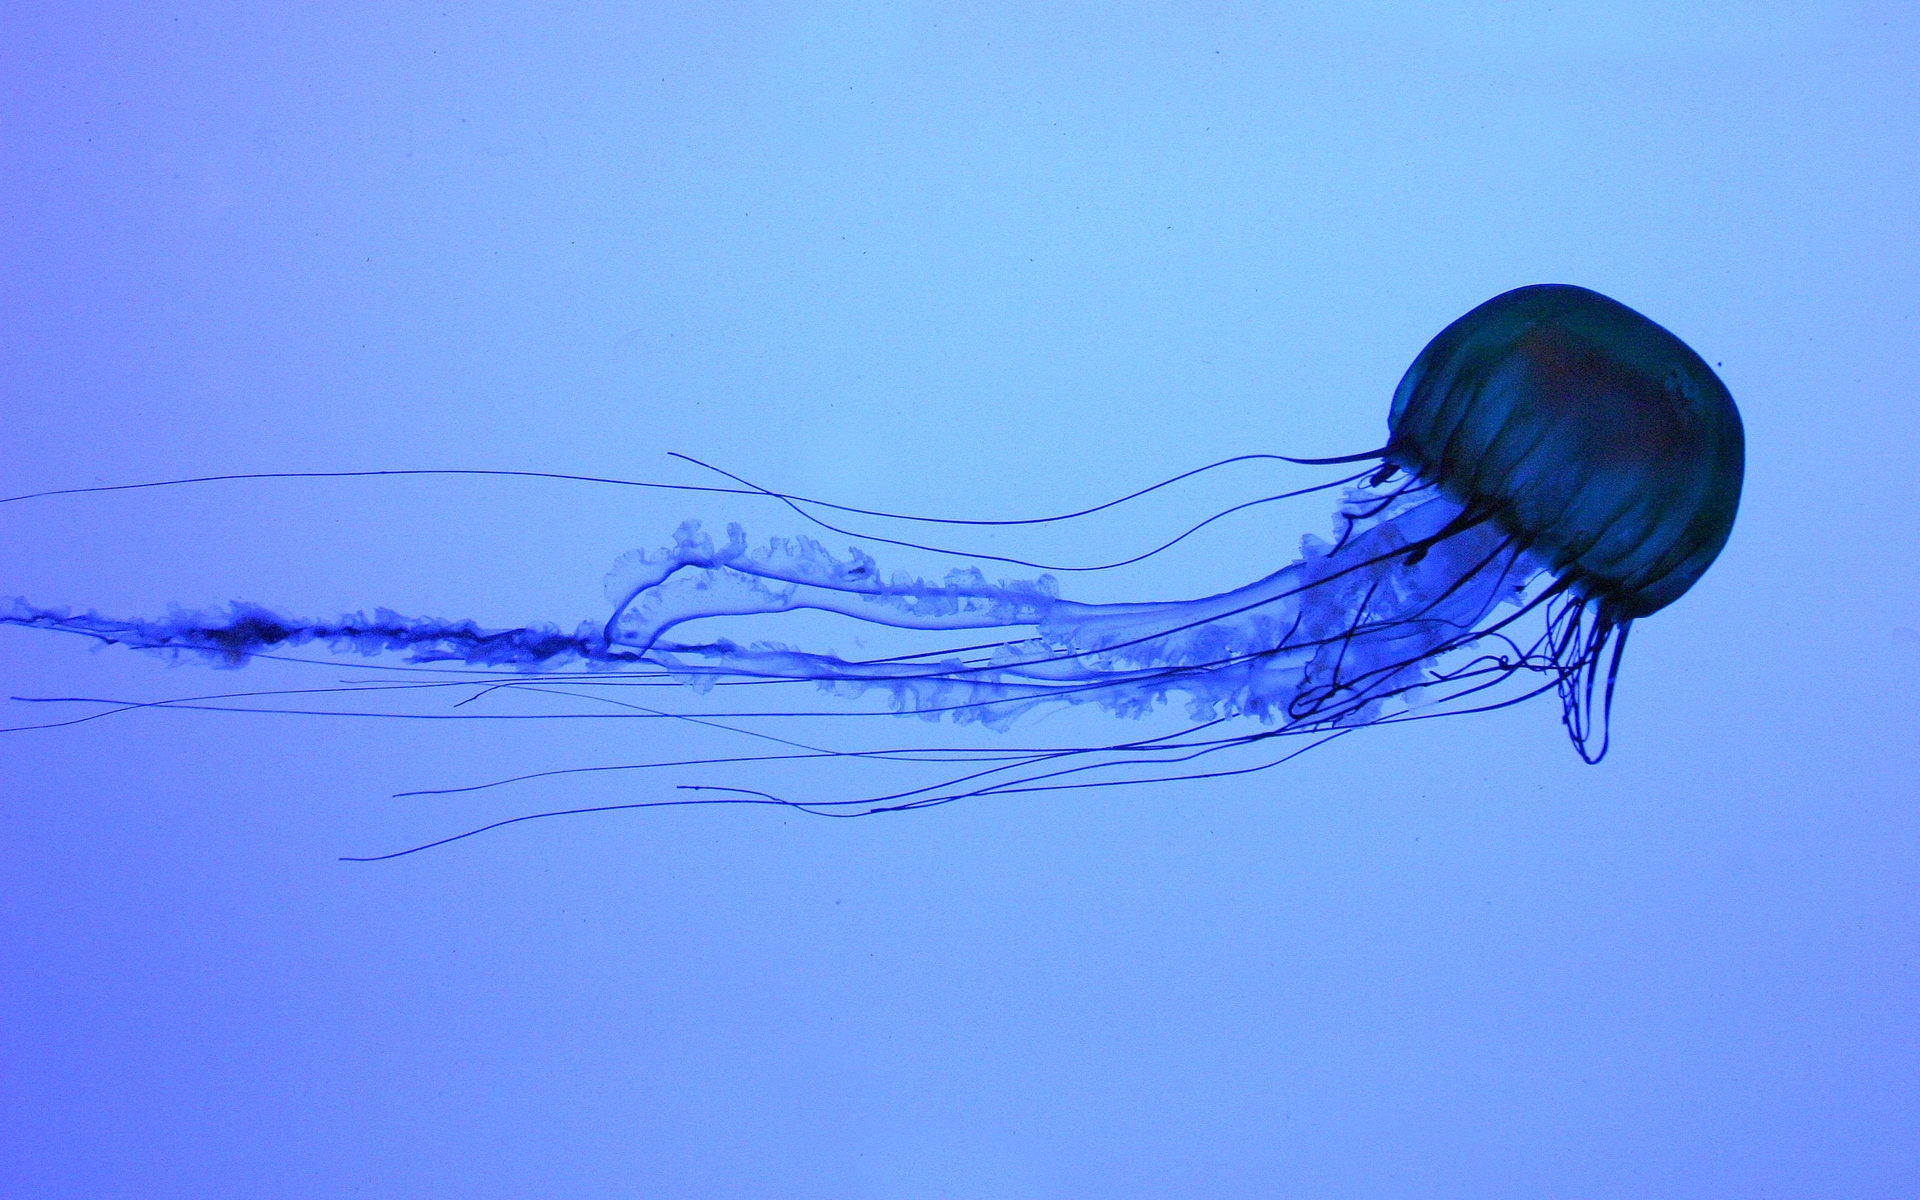 Jellyfish Picture